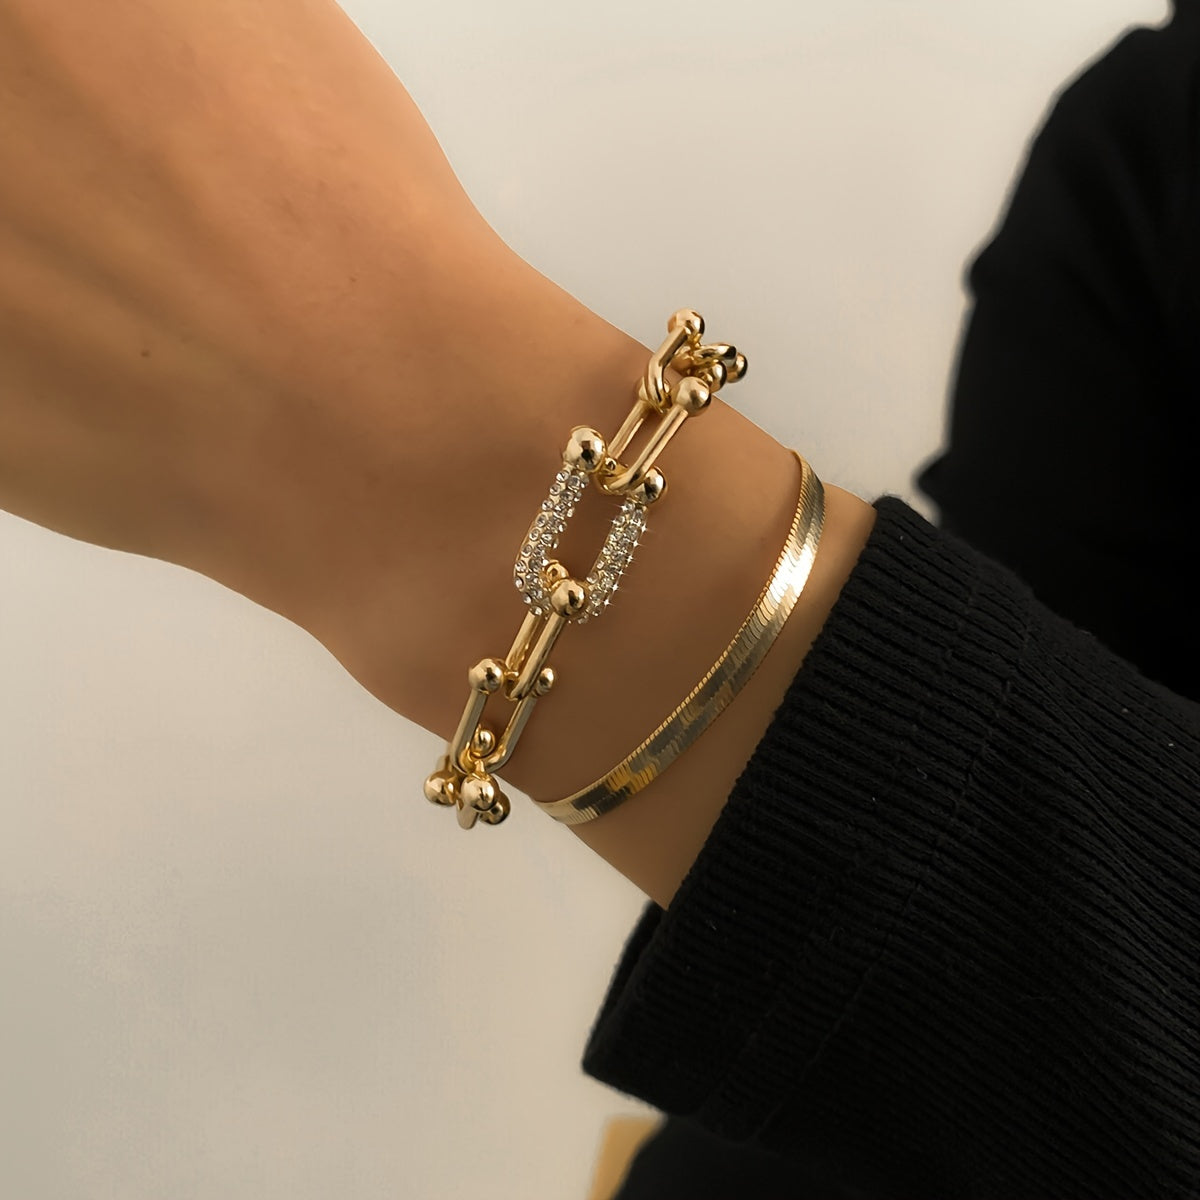 2-Piece Flat Snake Chain Diamond Bracelet Set Featuring U-shaped Buckle